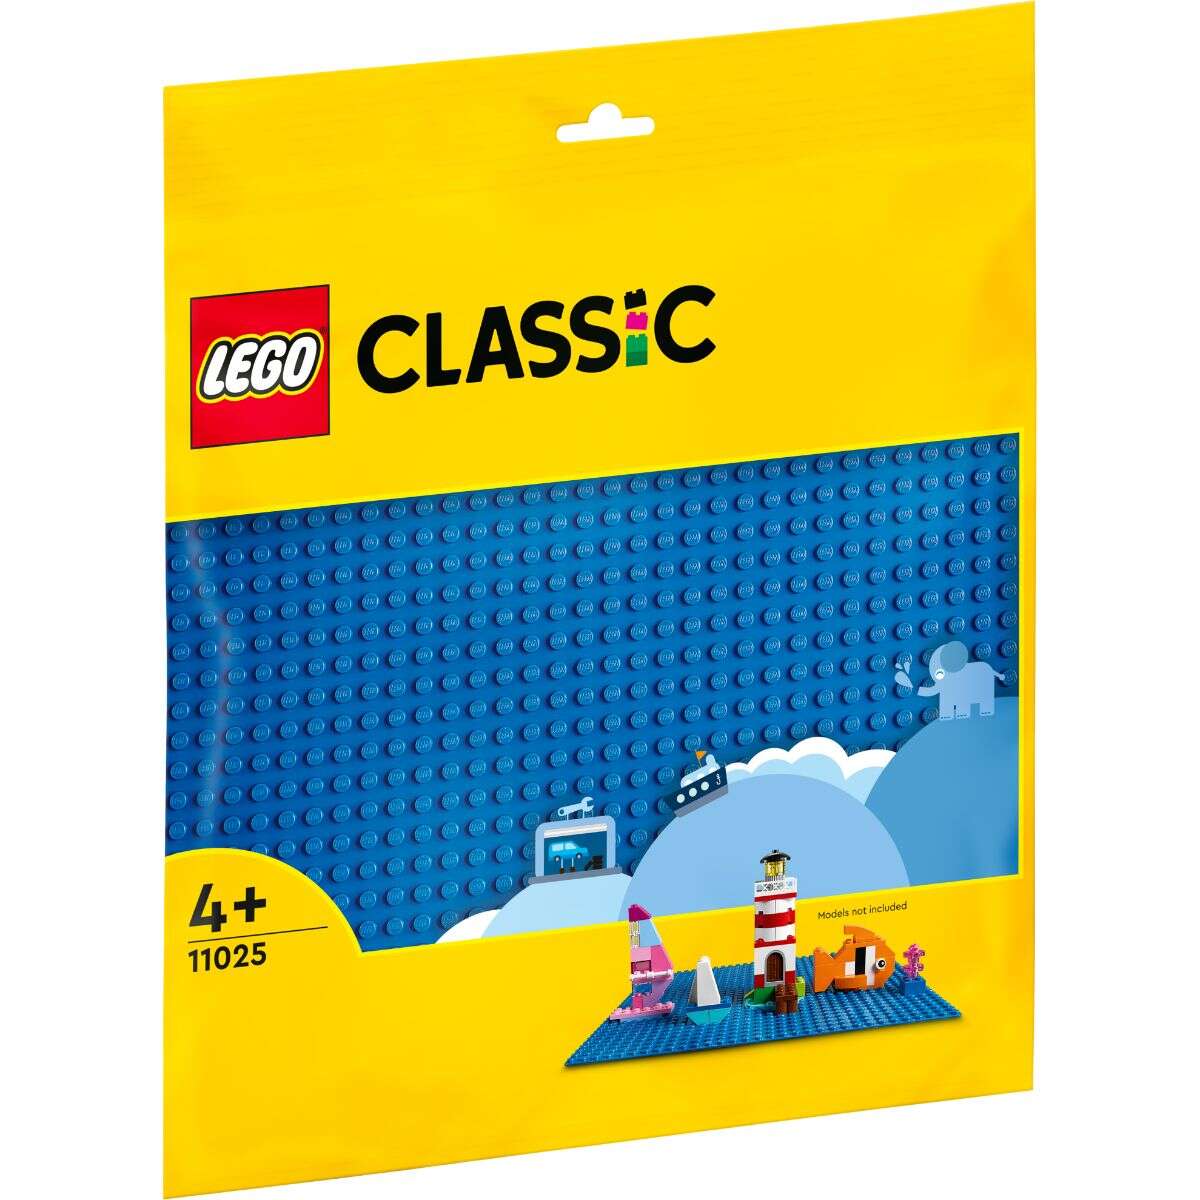 sense path Alexander Graham Bell Caramizi si idei lego classic - 3423 produse -Partea 3